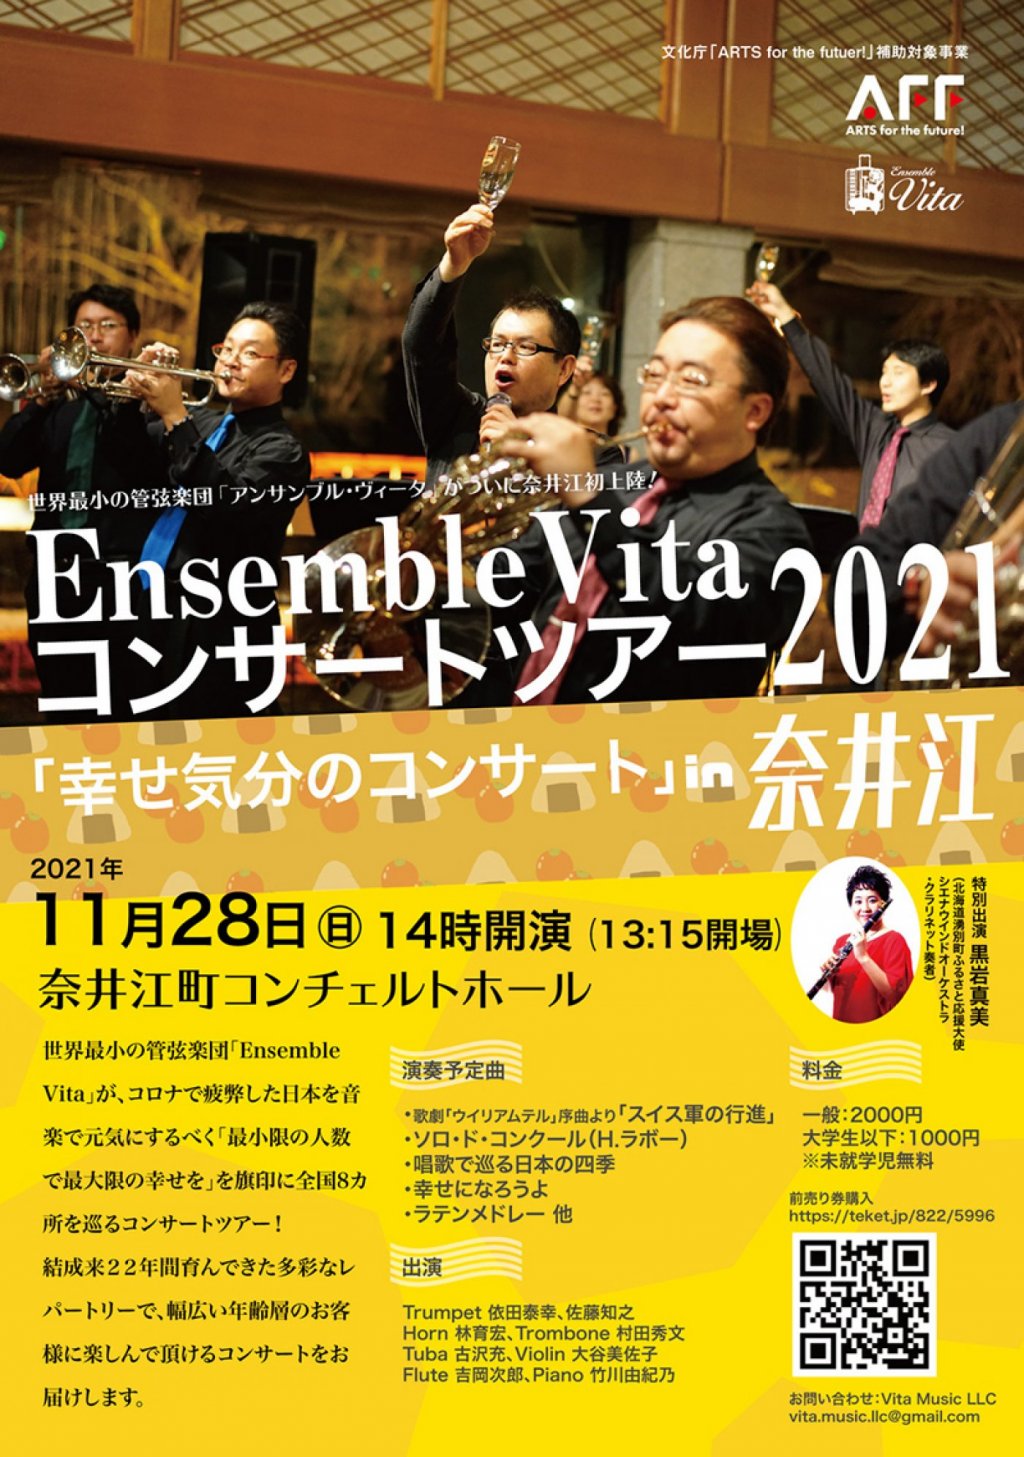 Ensemble VITA 幸せ気分のコンサート in 奈井江